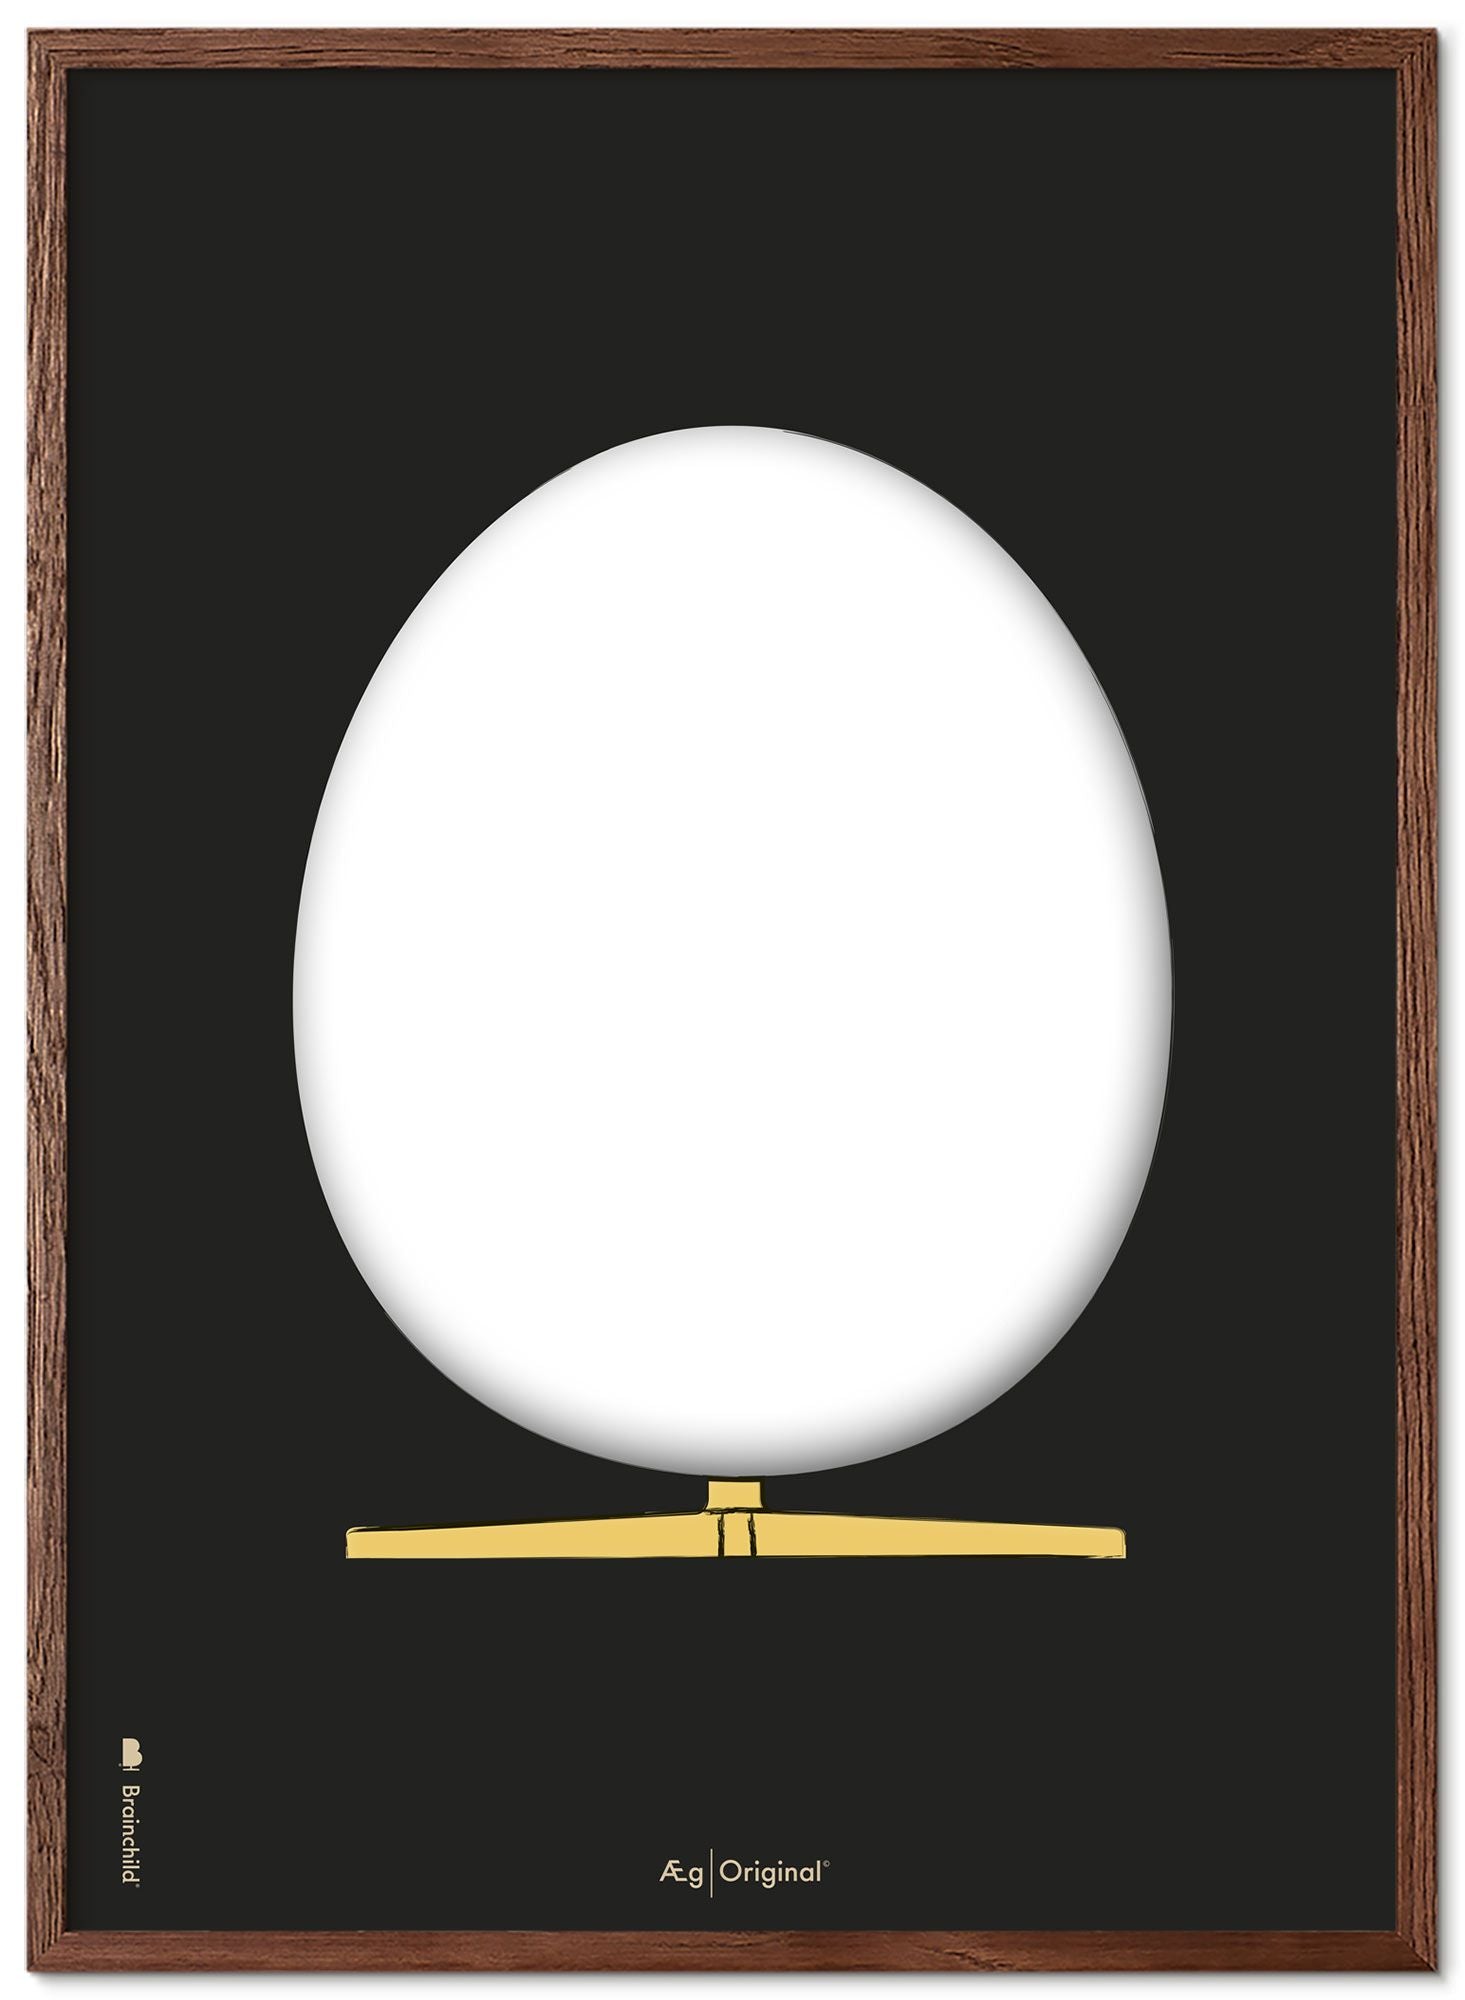 Brainchild The Egg Design Sketch Poster Frame Made Of Dark Wood 50x70 Cm, Black Background